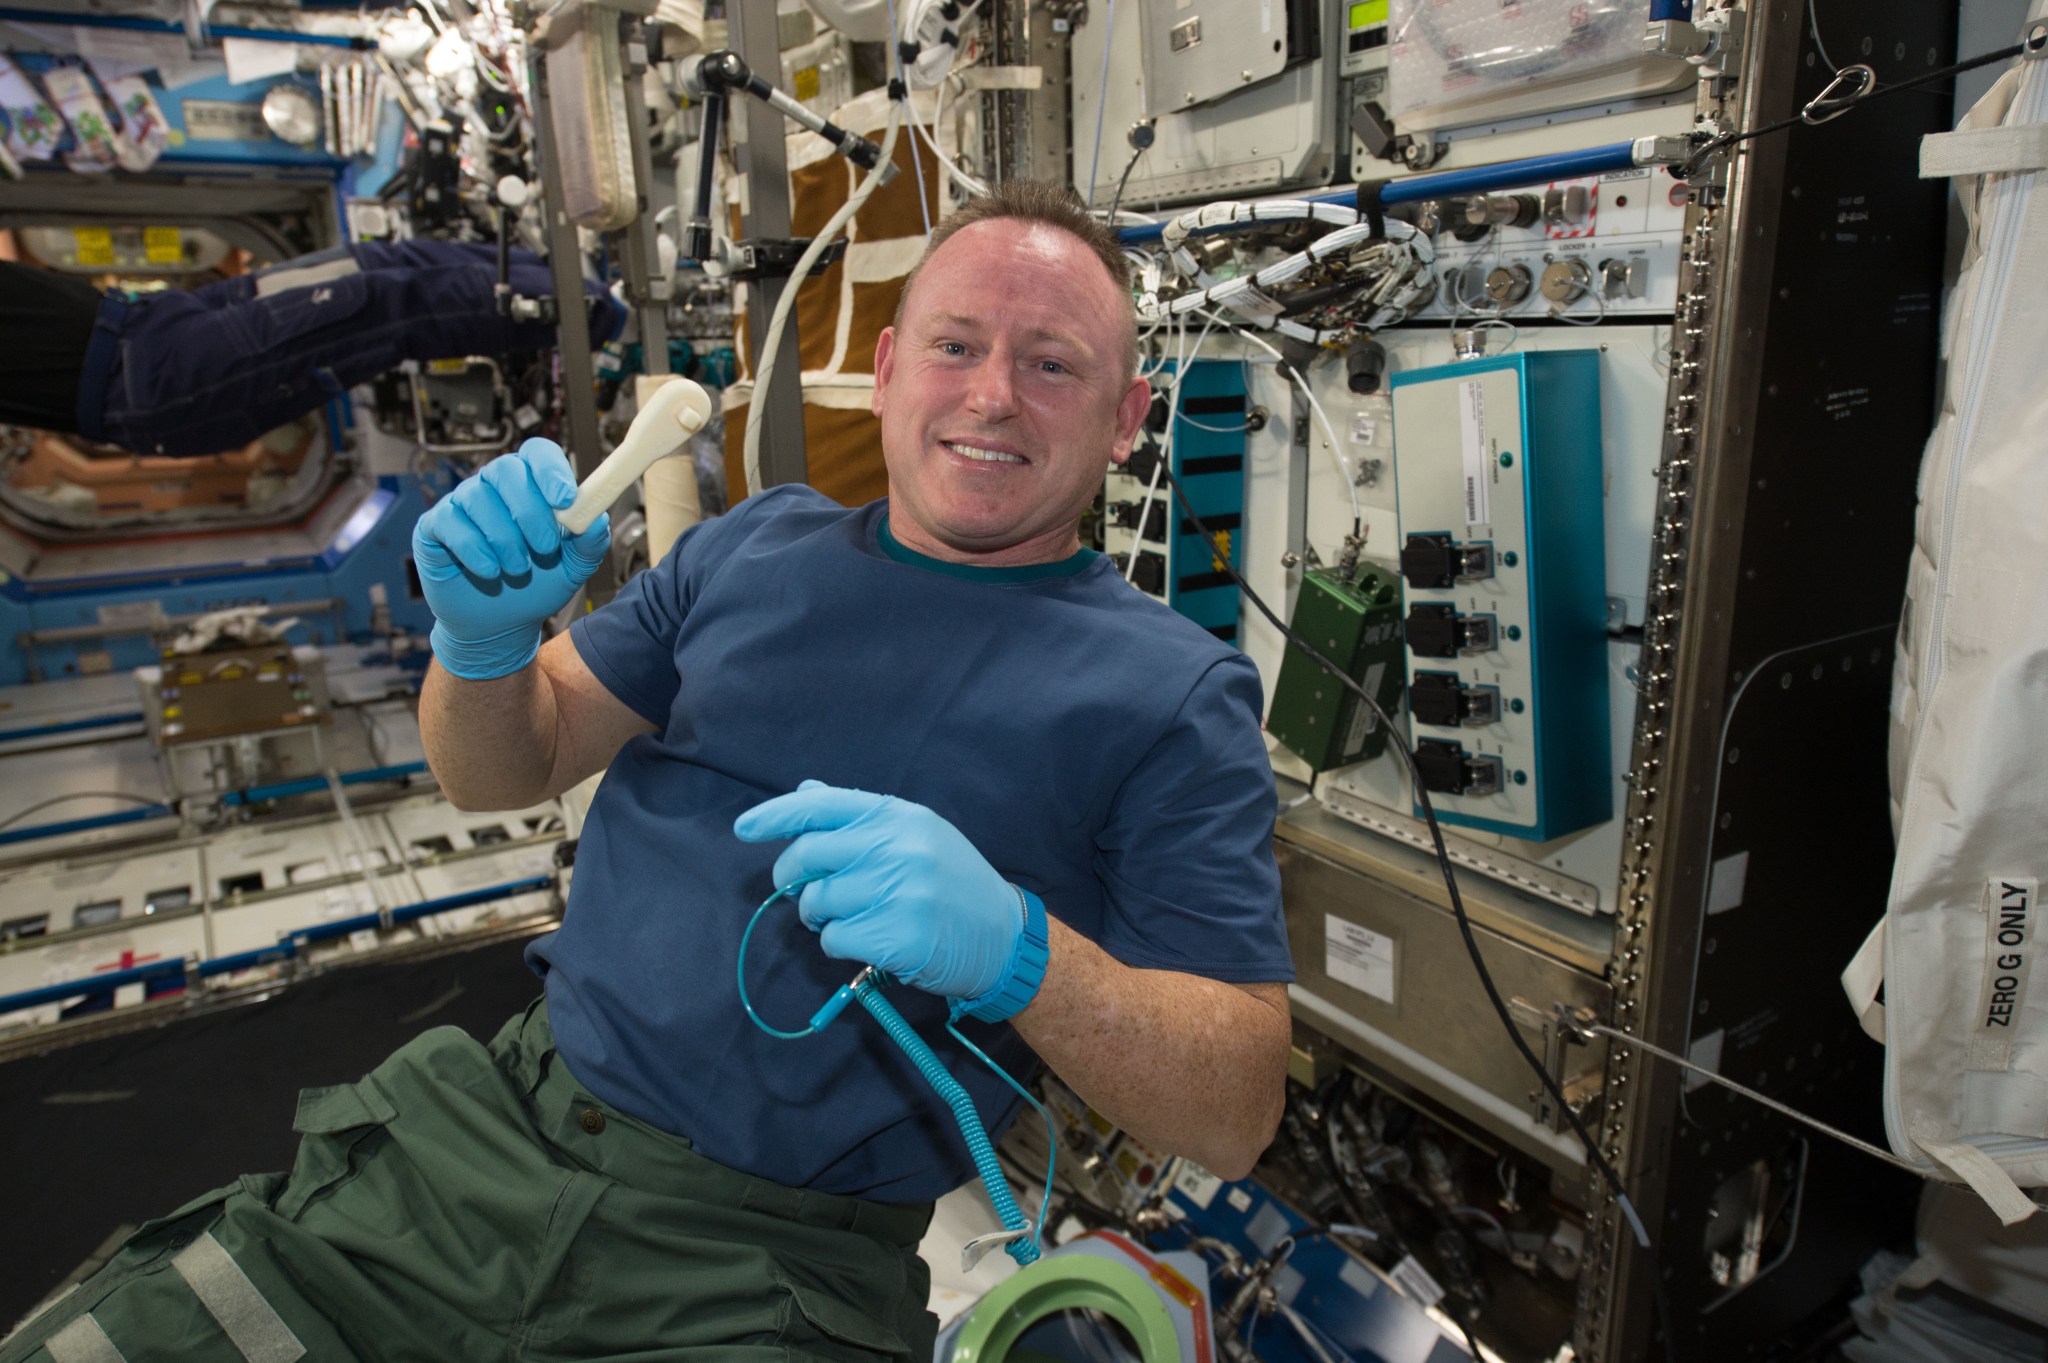 NASA Astronaut Barry “Butch” Wilmore